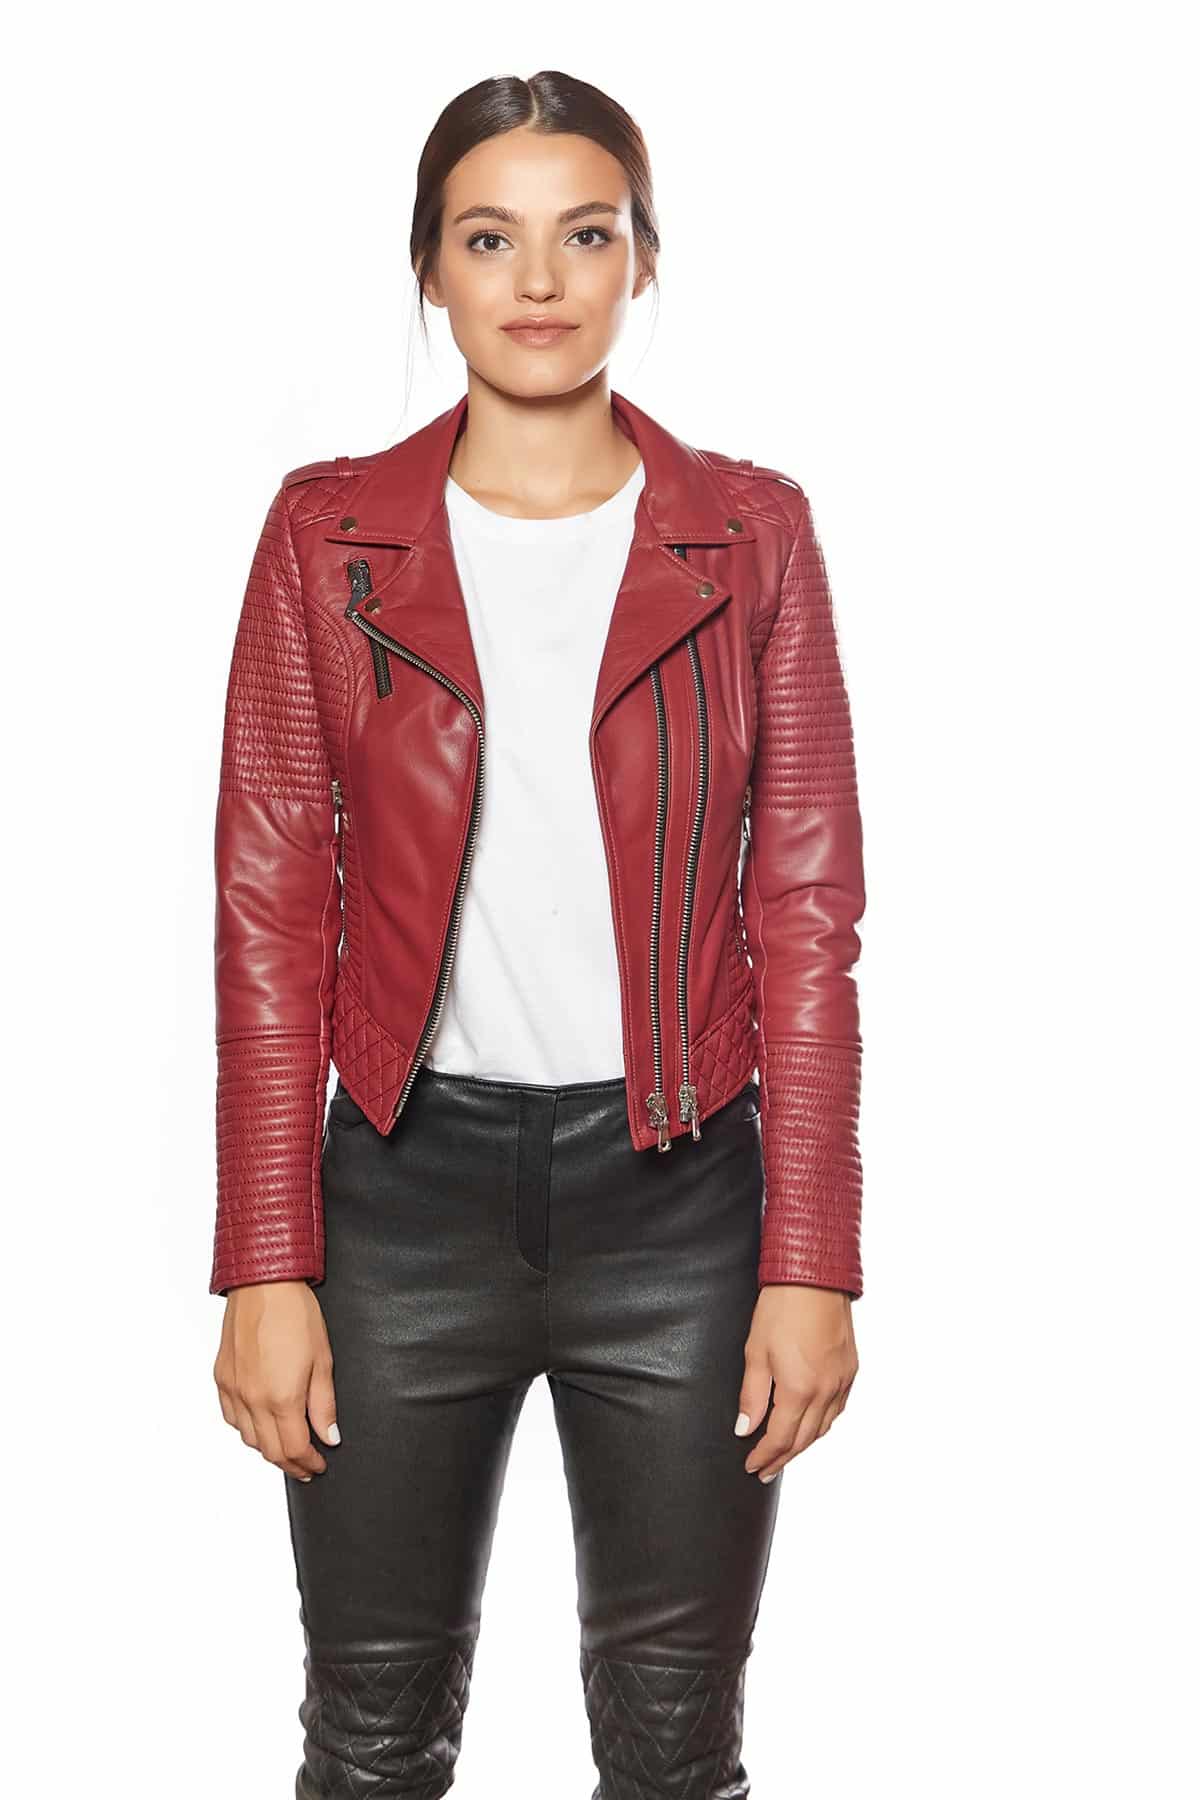 Womens Moto Red Leather Jacket – Biker Style Leather Jacket